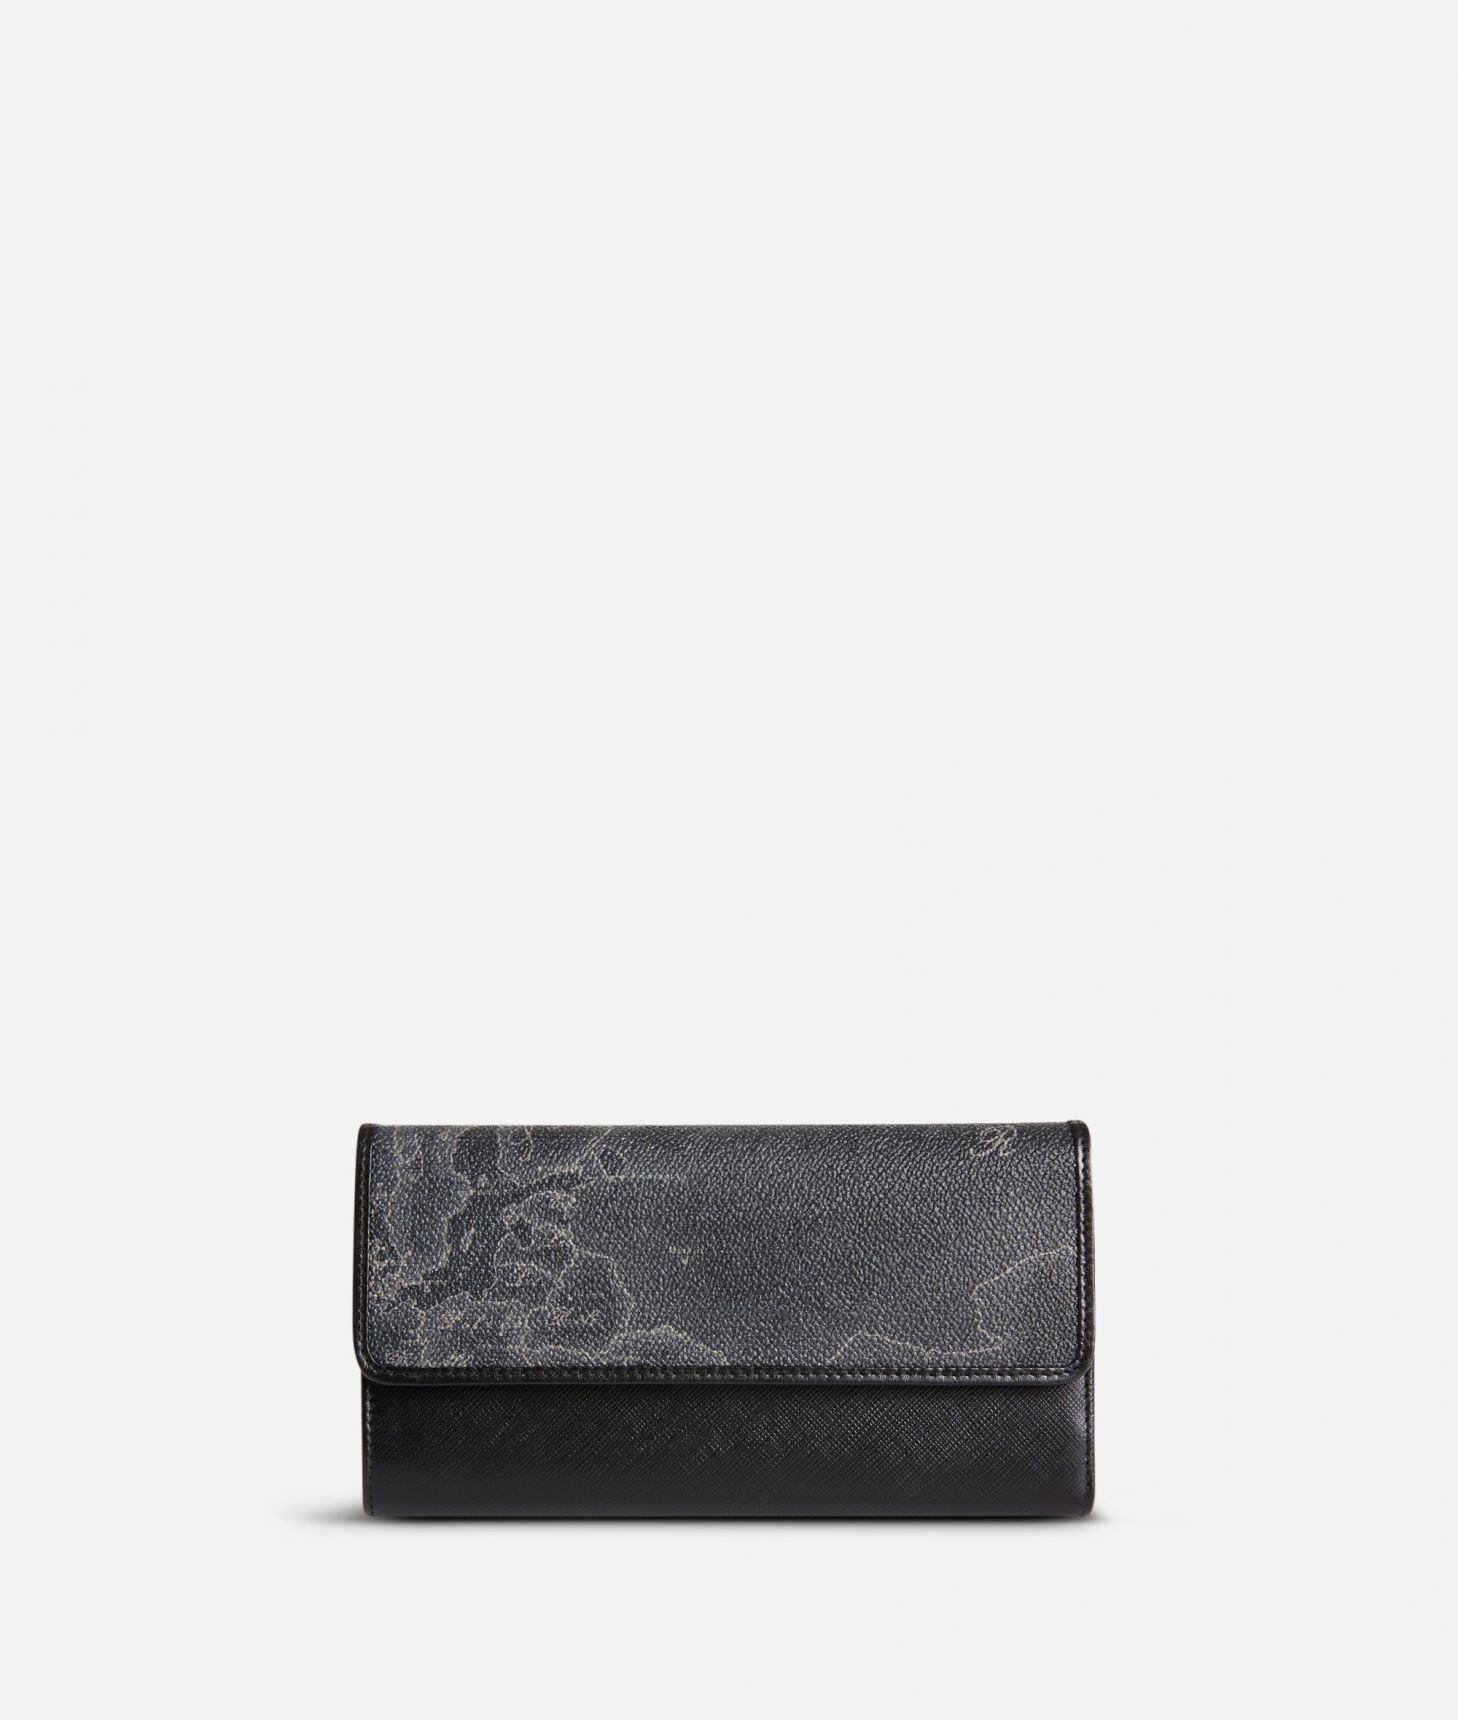 Geo Black Large wallet with pocket,front